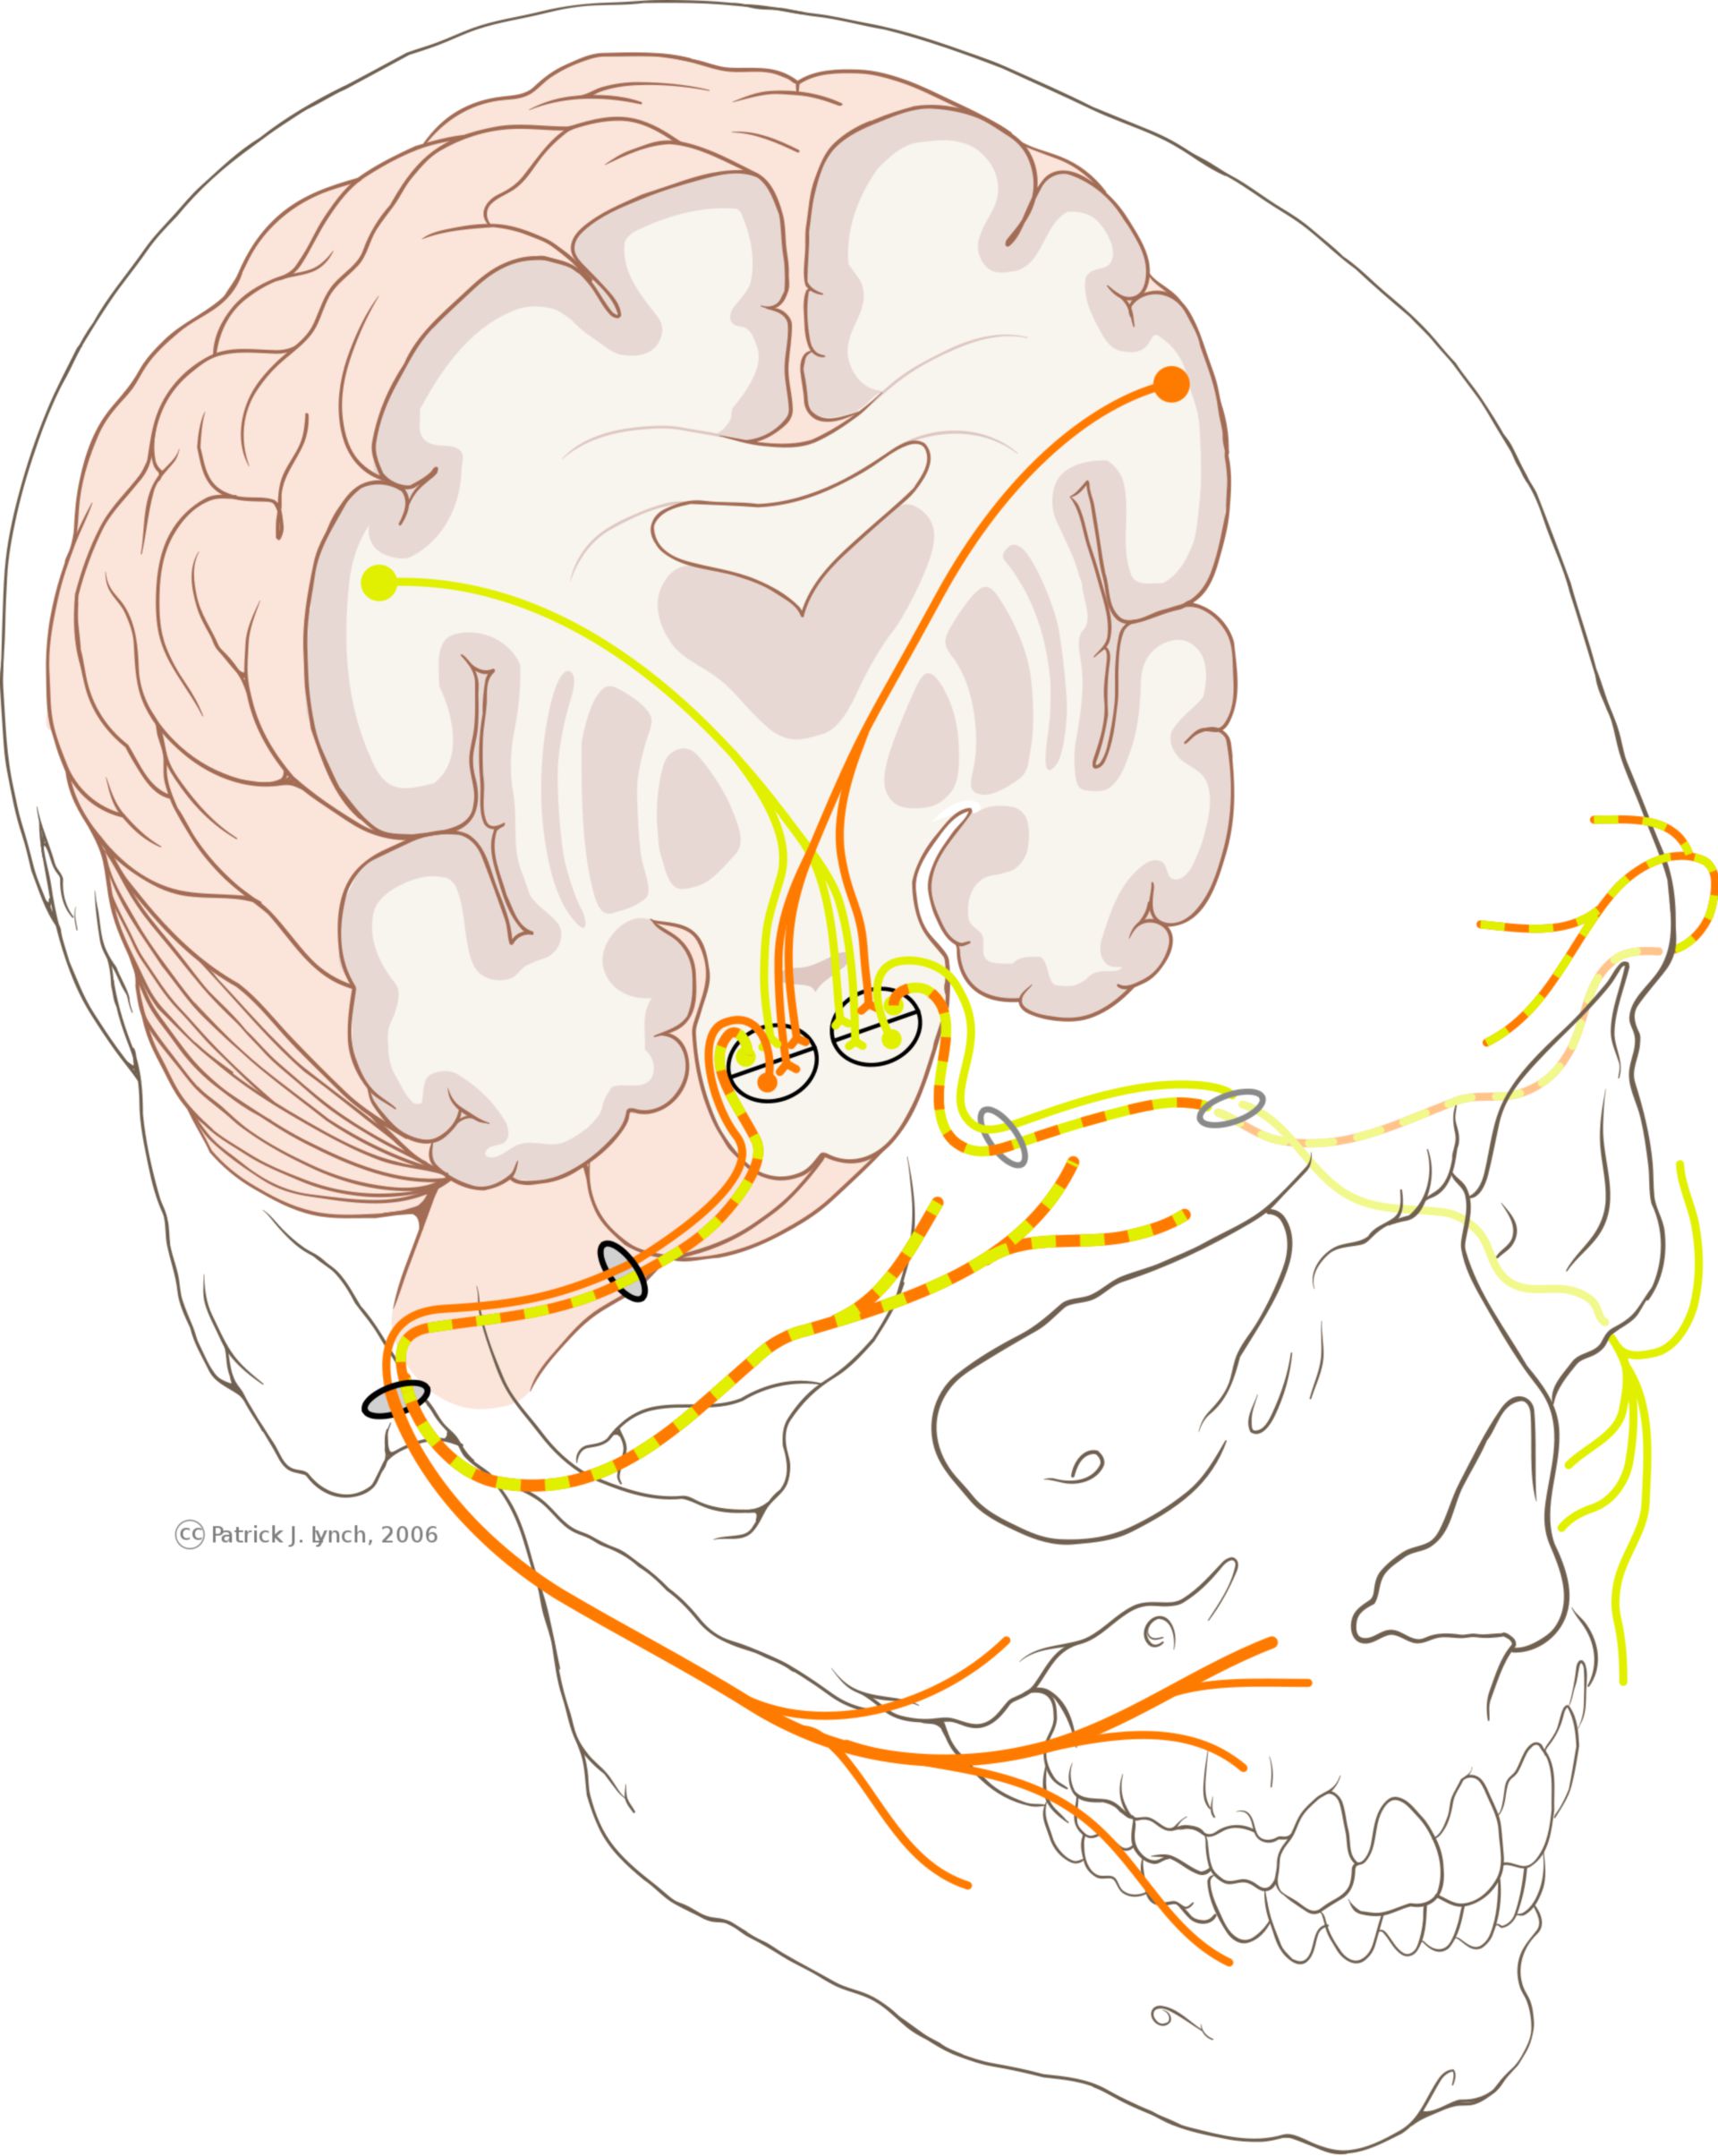 Cranial nerve VII 7